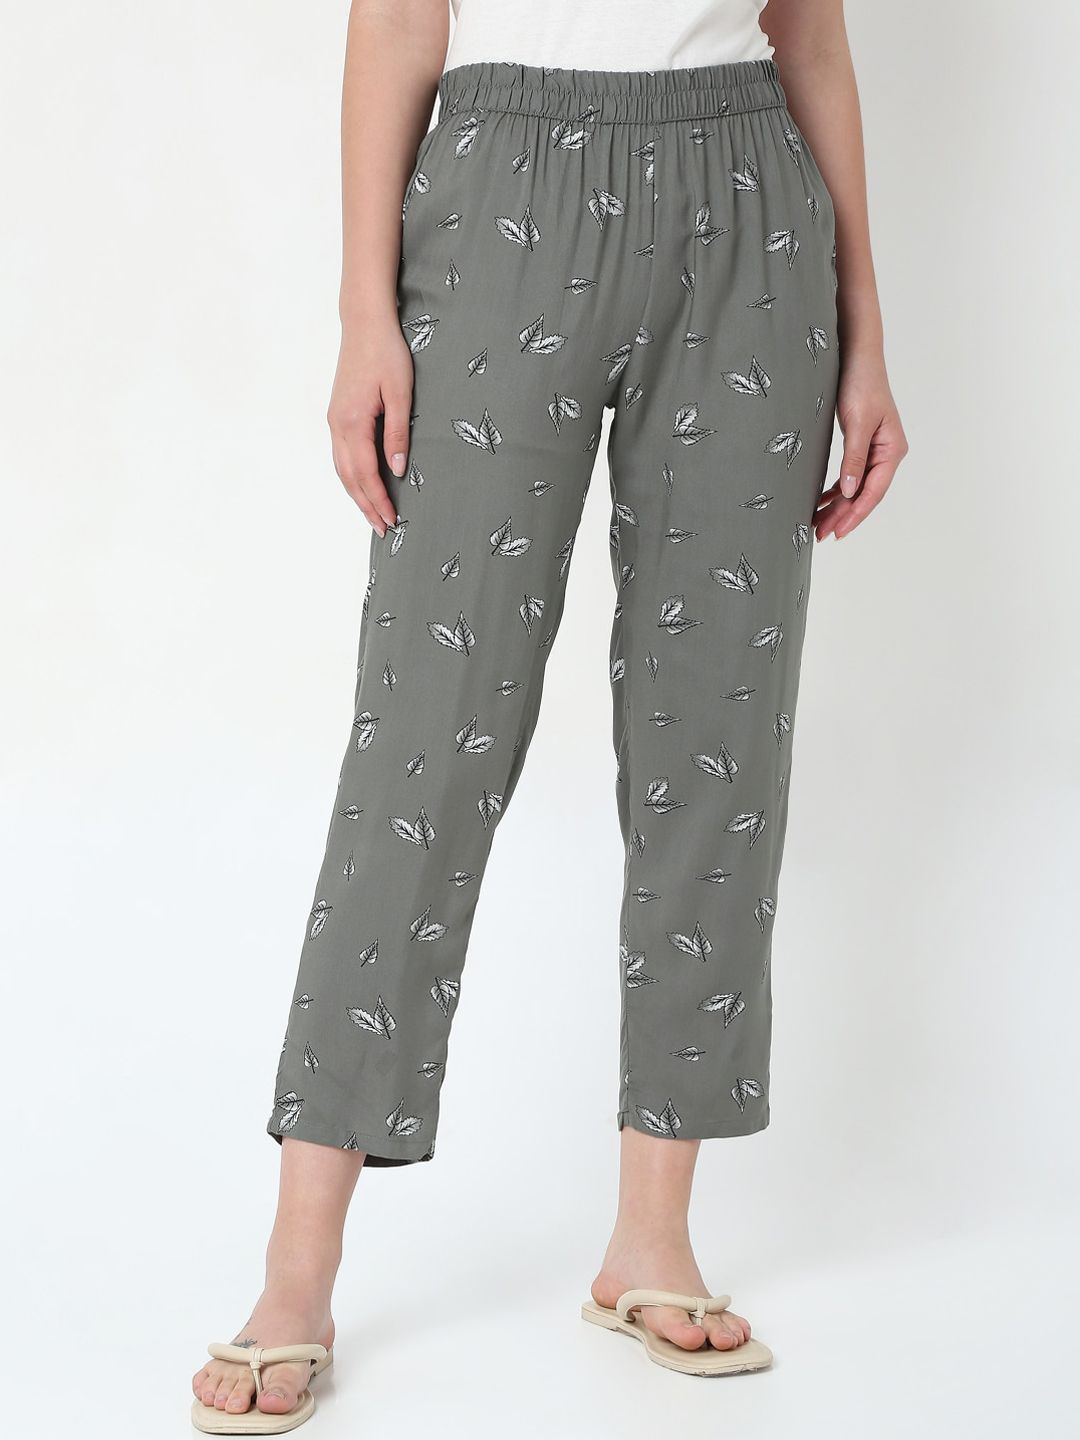 Smarty Pants Women Grey Cotton Floral Print Pyjamas Price in India